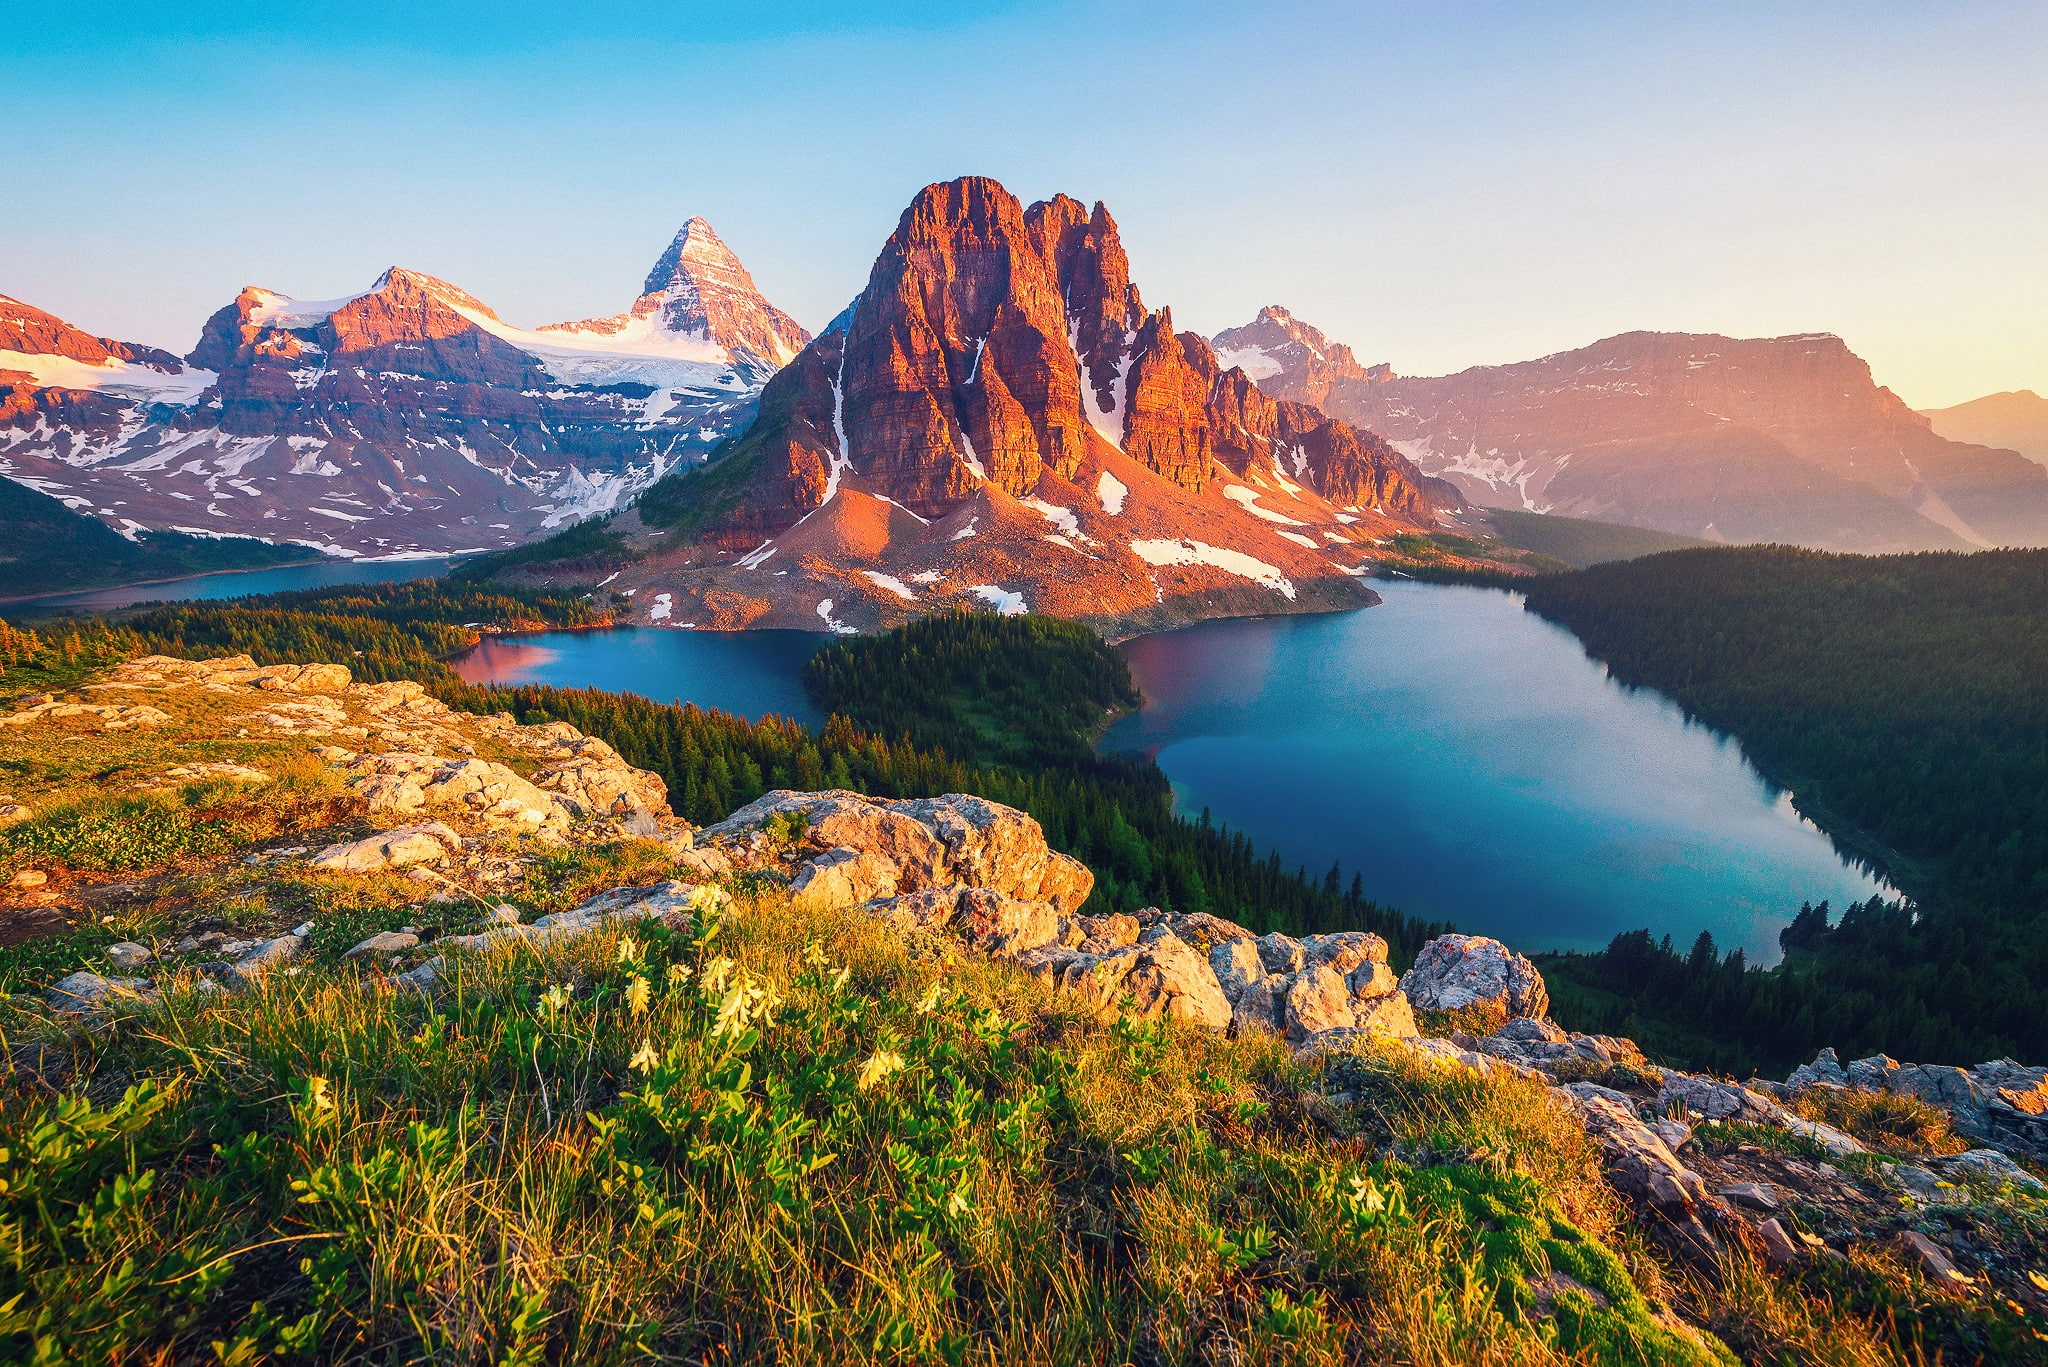 Canada, British columbia, Mountain, Lake, scenics - nature